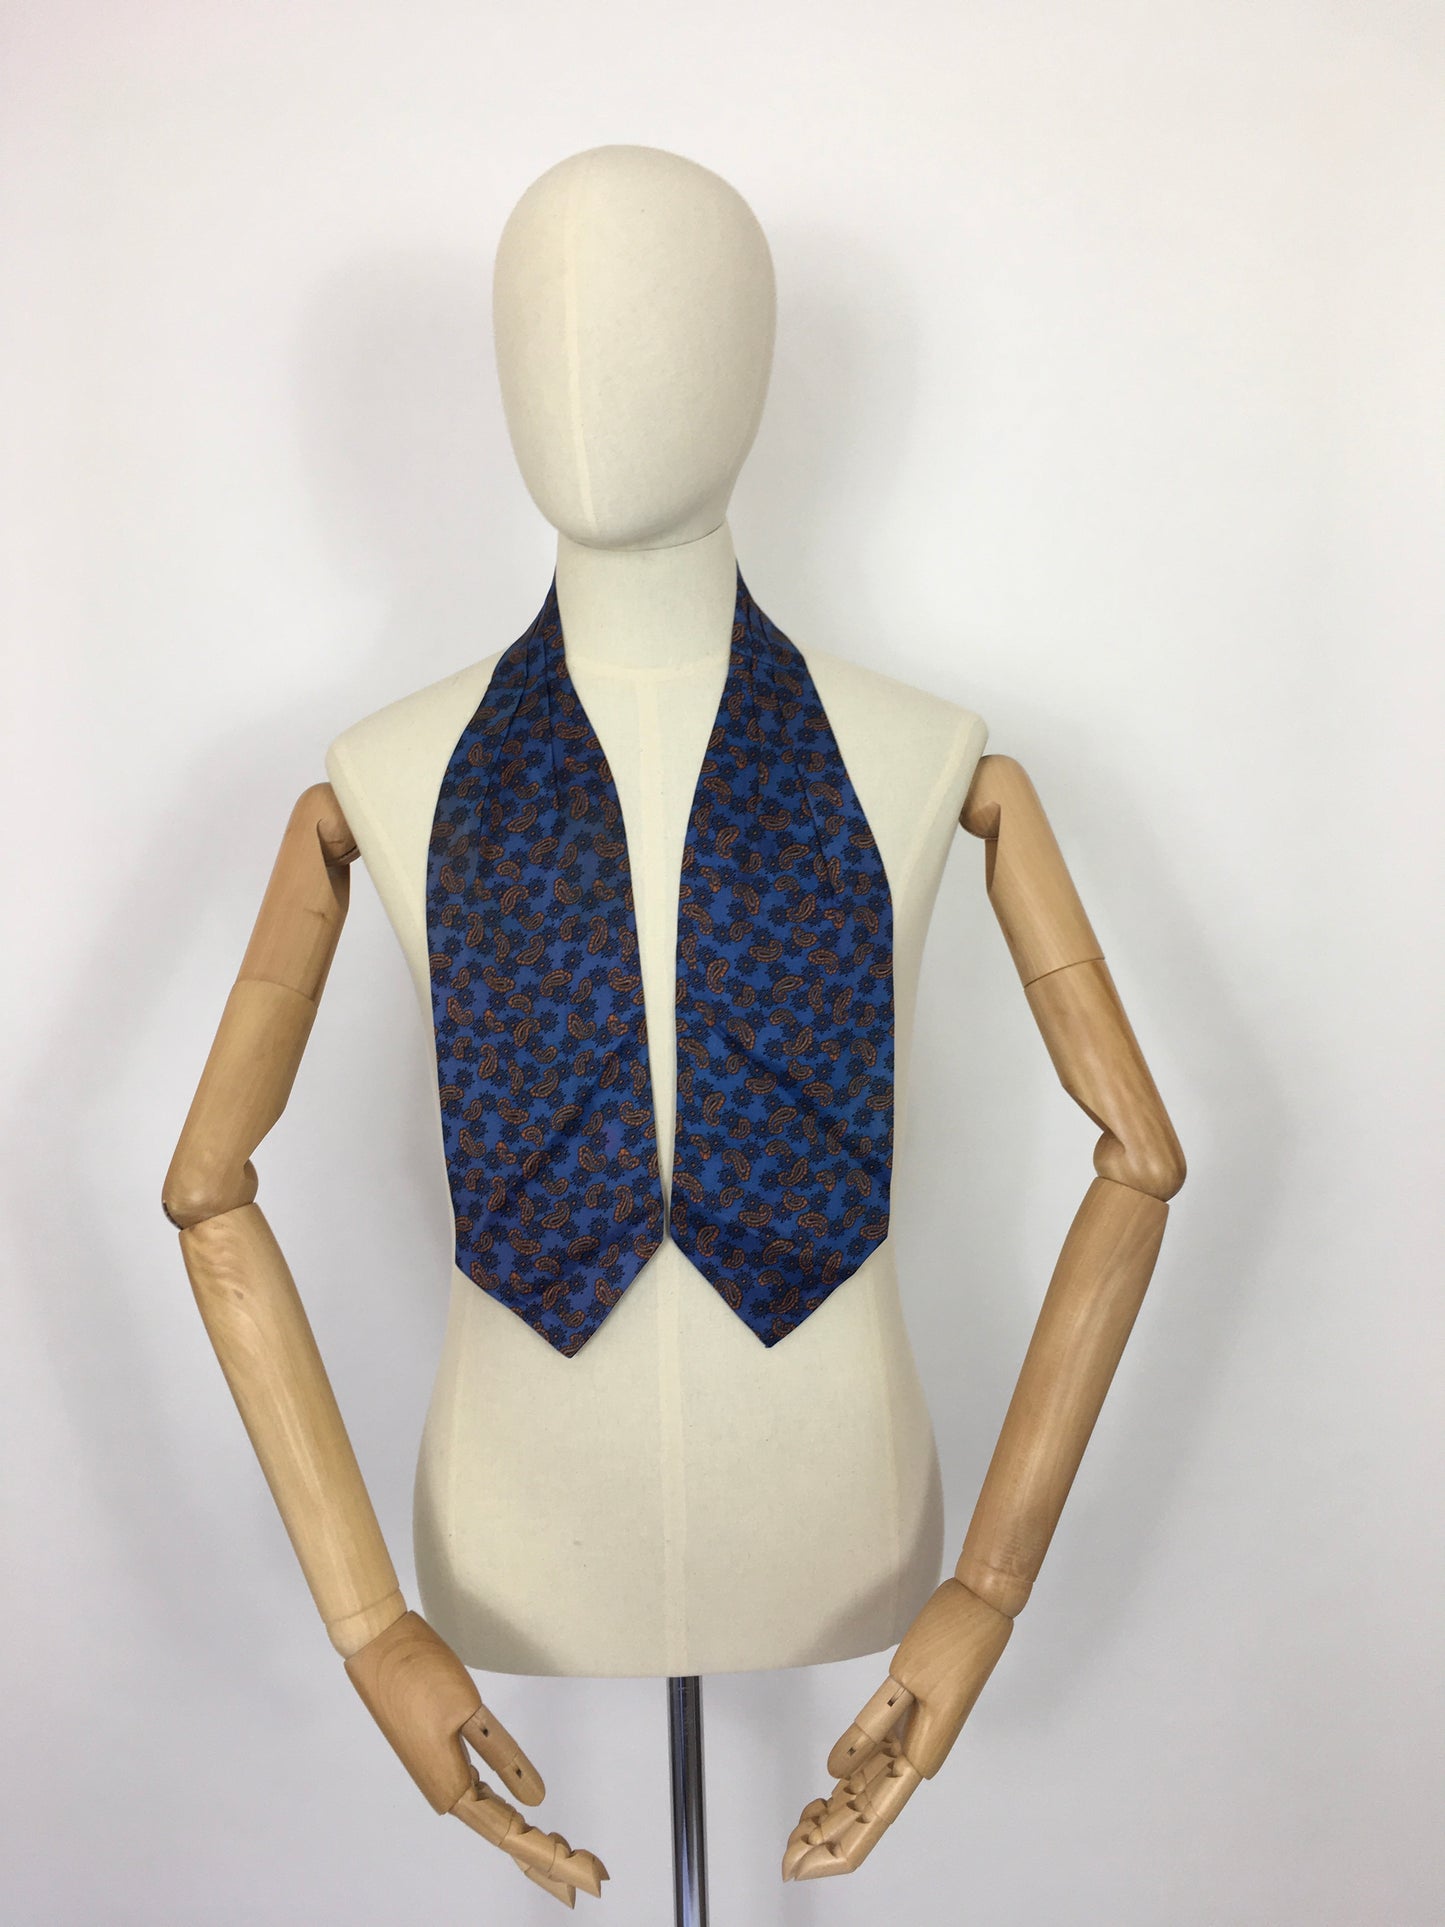 Original late 1950s Mens Silk Cravat - In a Very Fun Blue and Orange Paisley Print